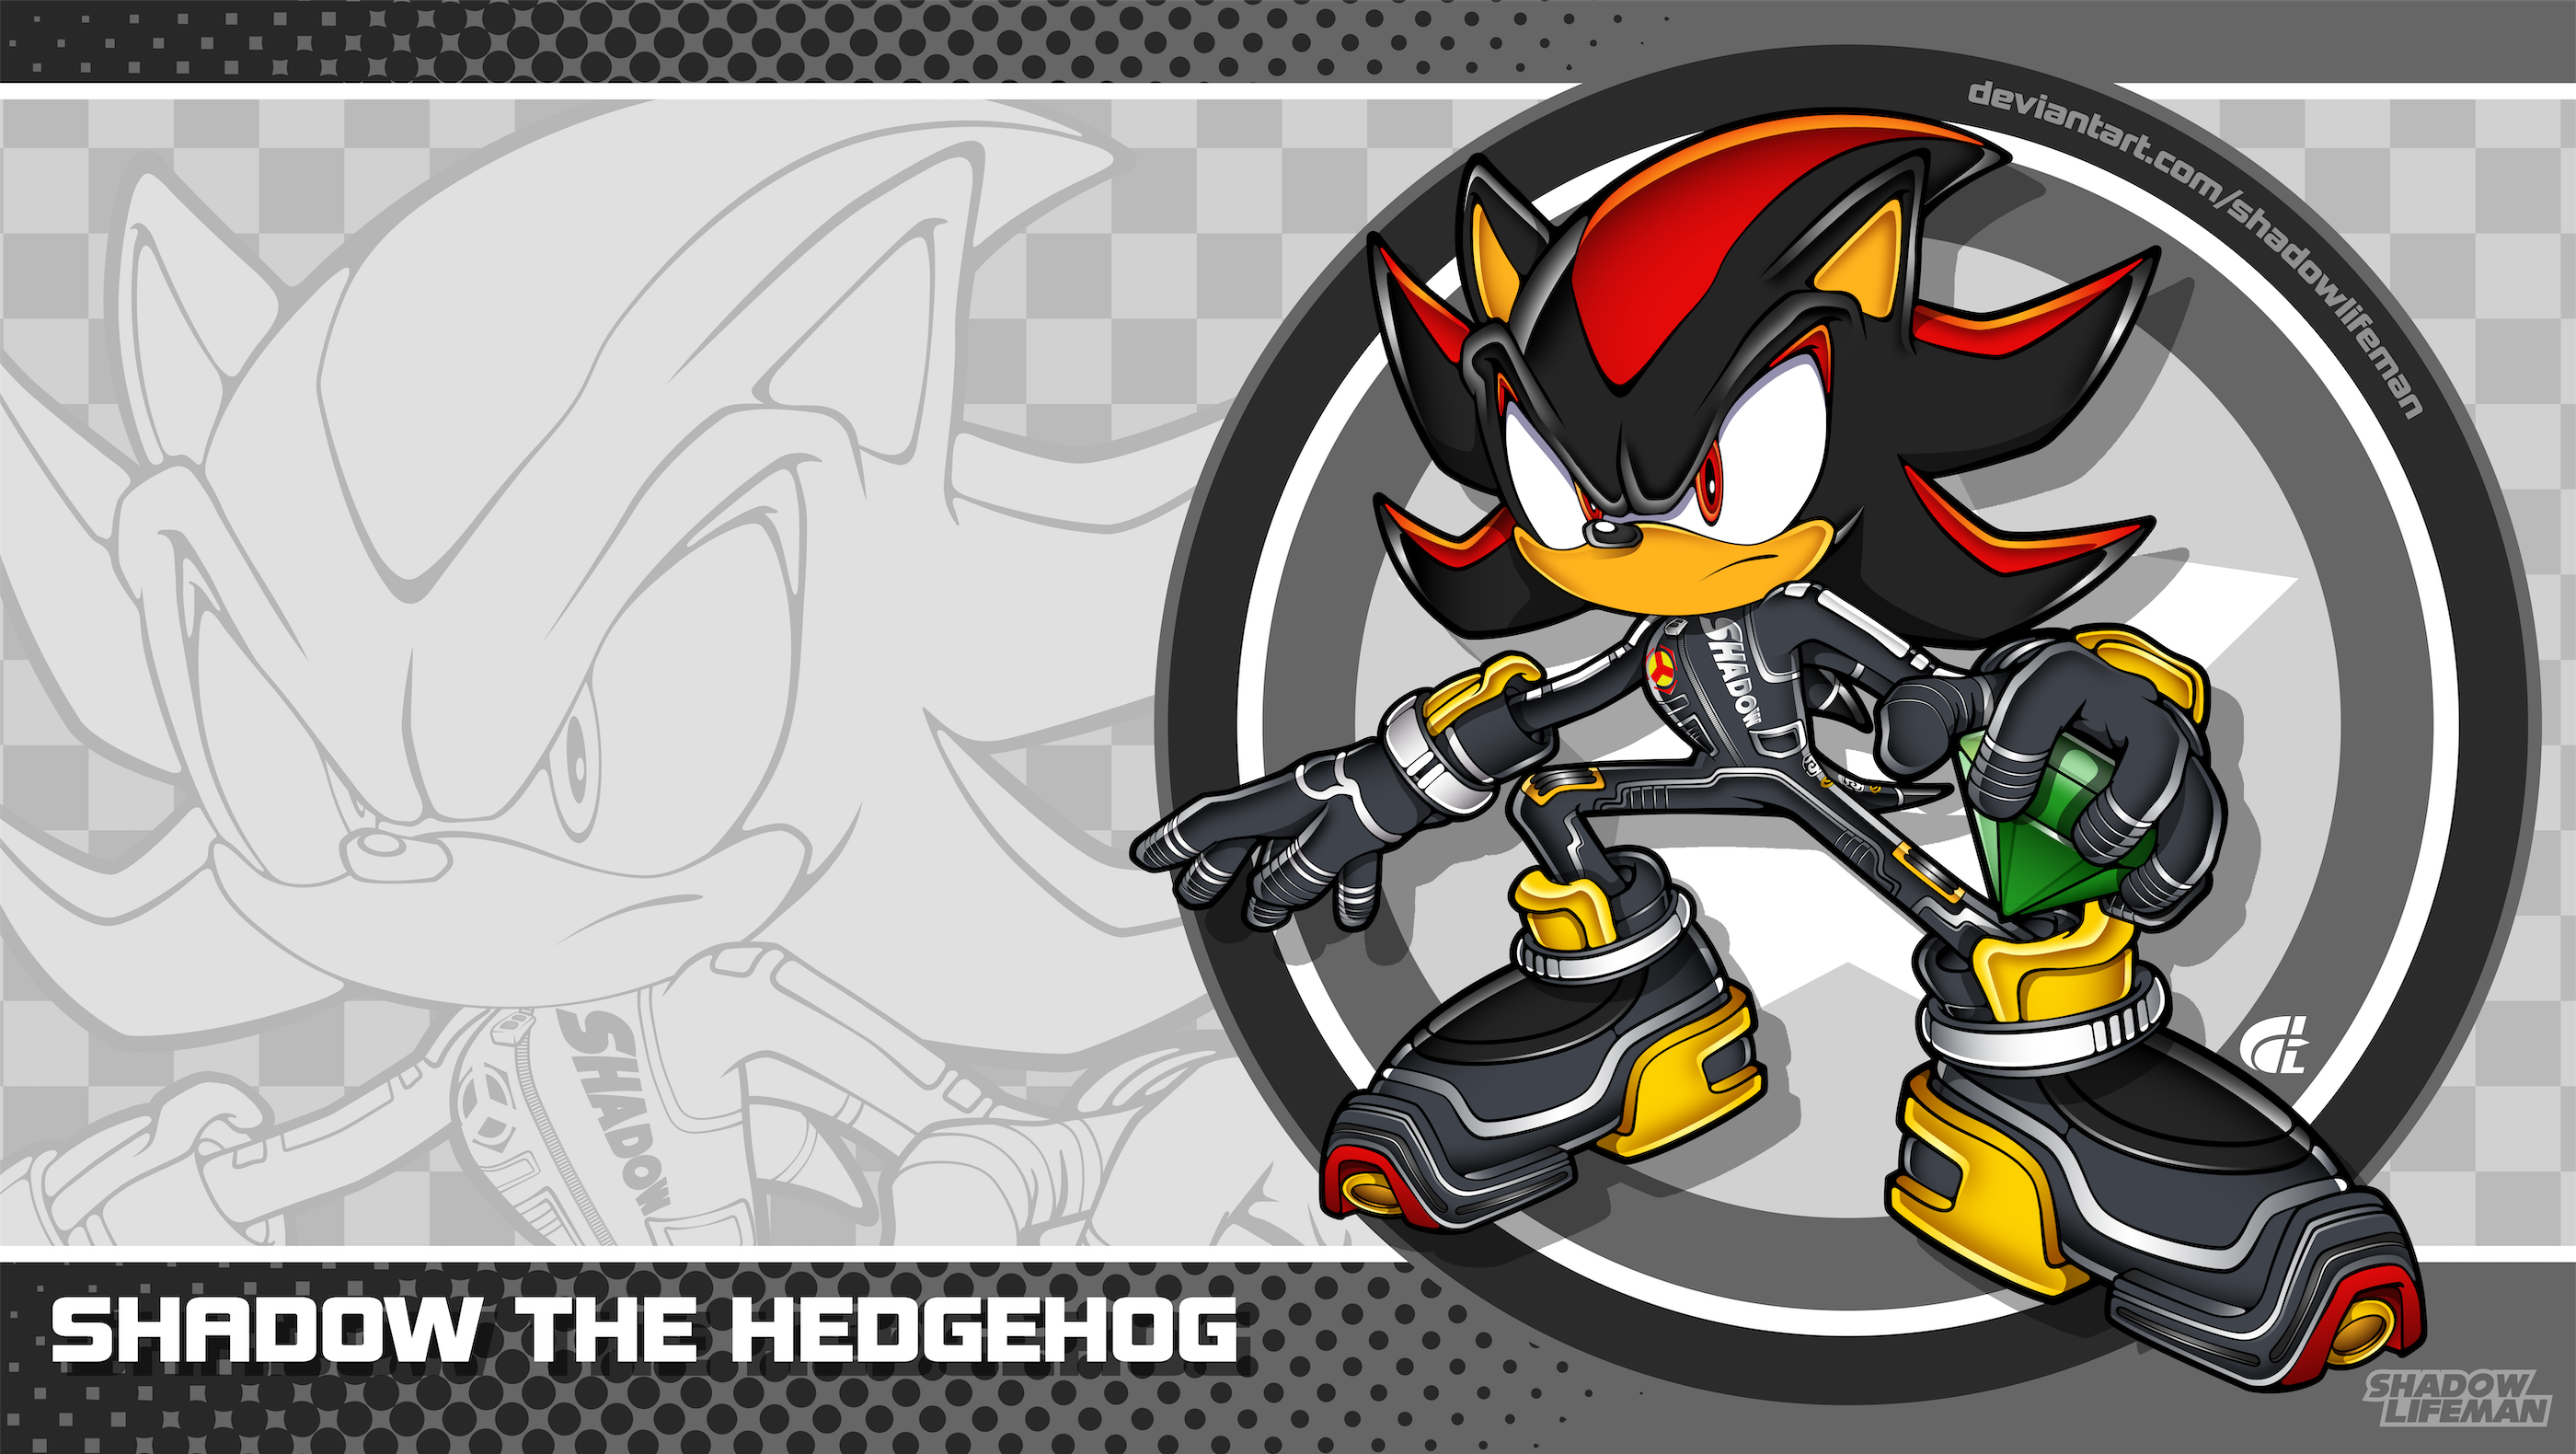 Sonic Adventure 2 - Sonic the Hedgehog by ShadowLifeman on DeviantArt